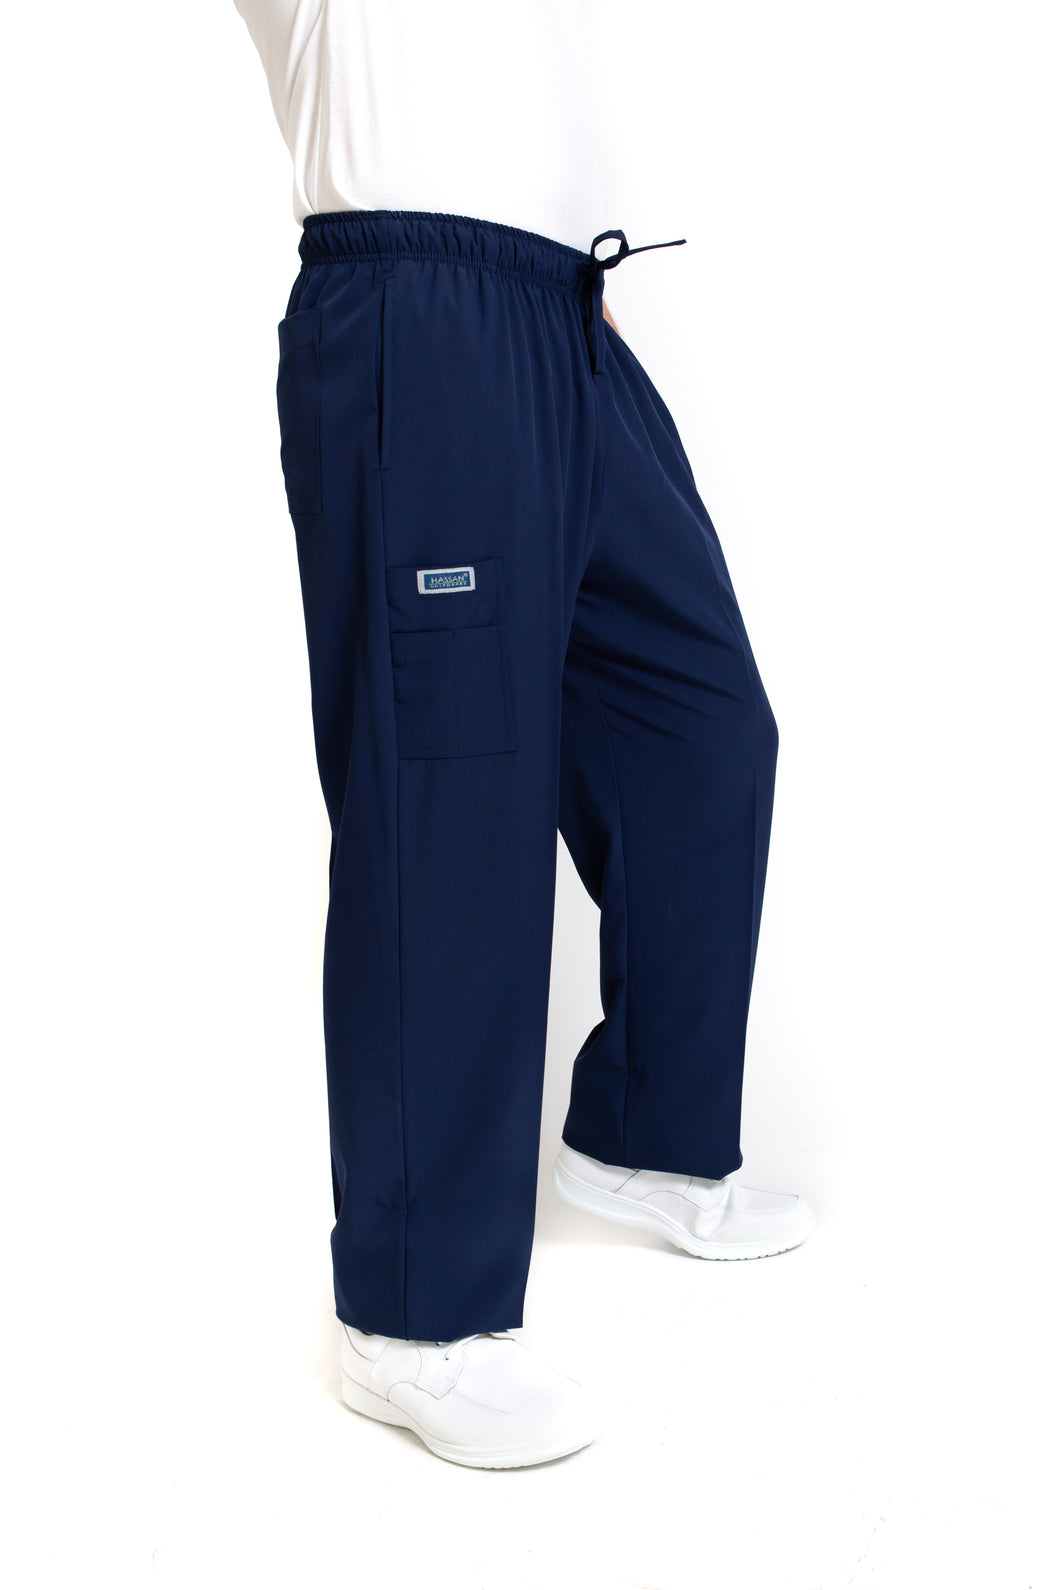 Pantalón Pant EA-02P REPELENTE A FLUIDOS-Color MARINO HOMBRE-HASSAN Uniformes